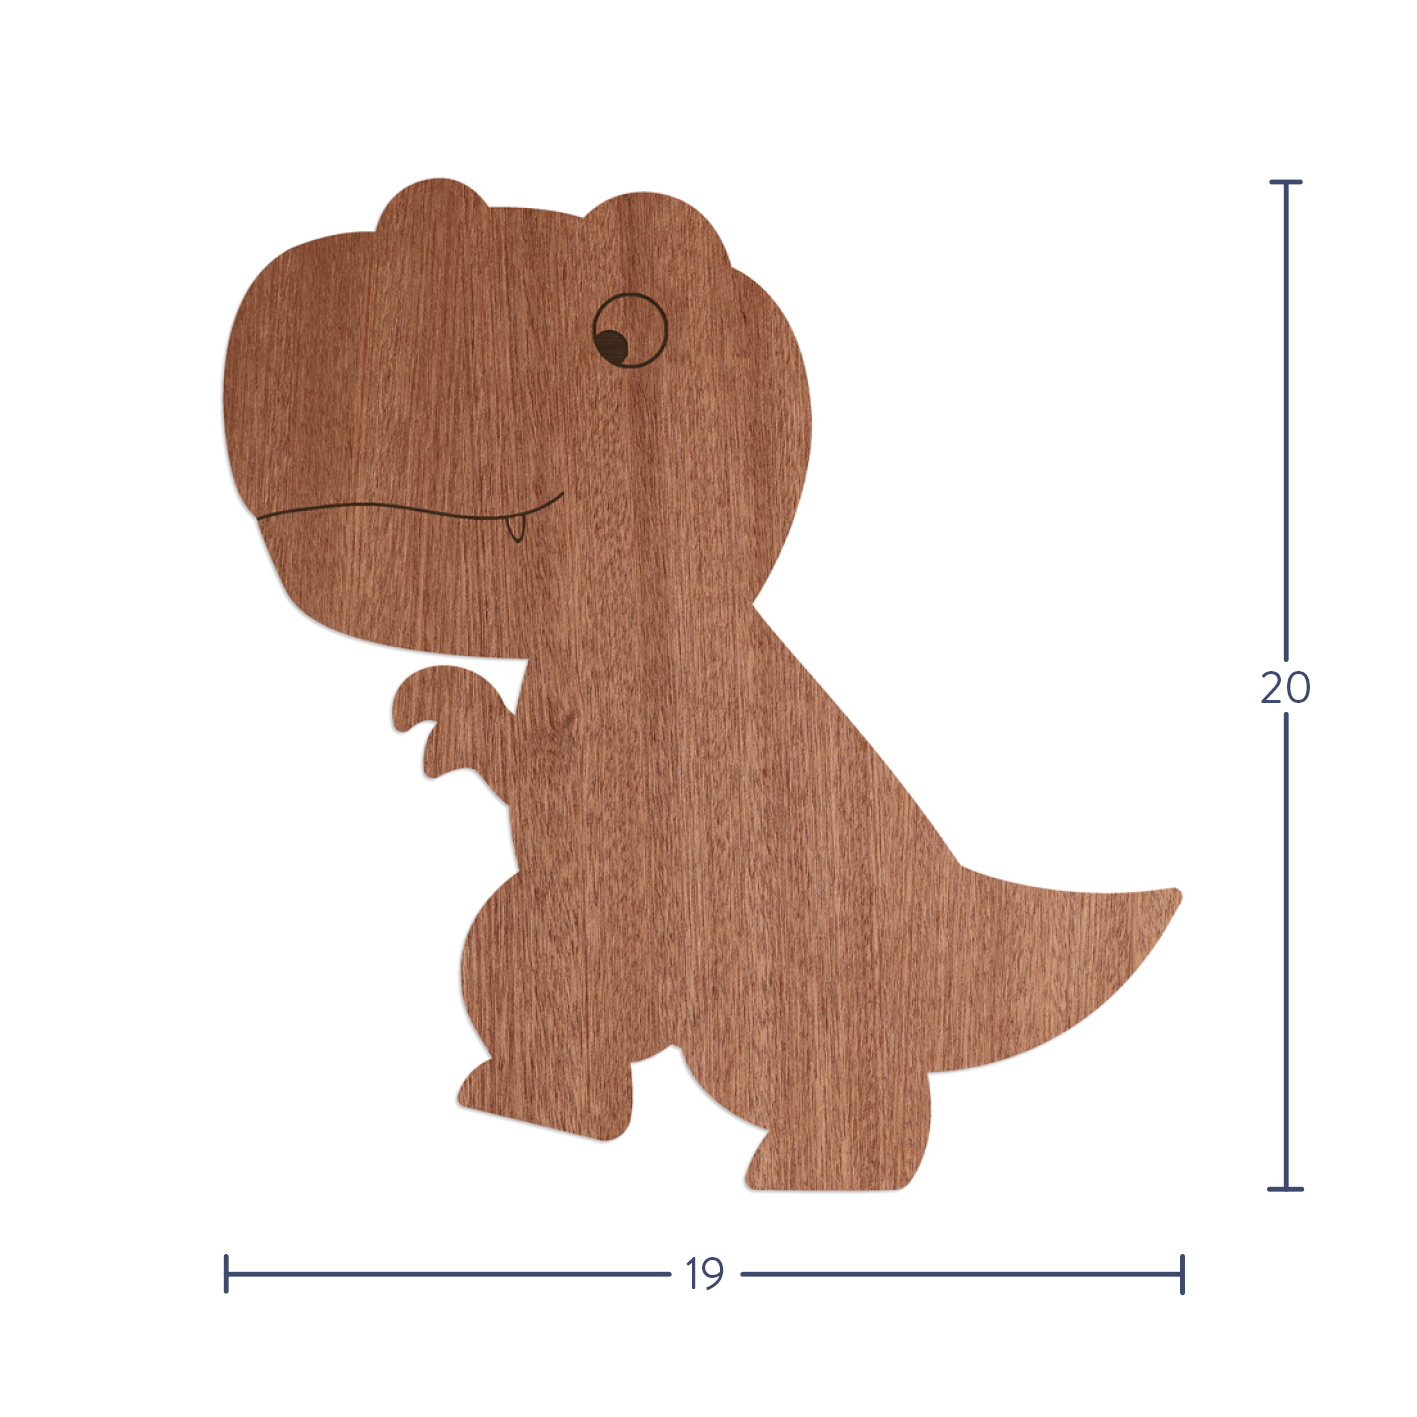 "Dino T-Rex" - 19x20 cm Wanddeko Holz aus Sperrholz mit Mahagoni-Furnier